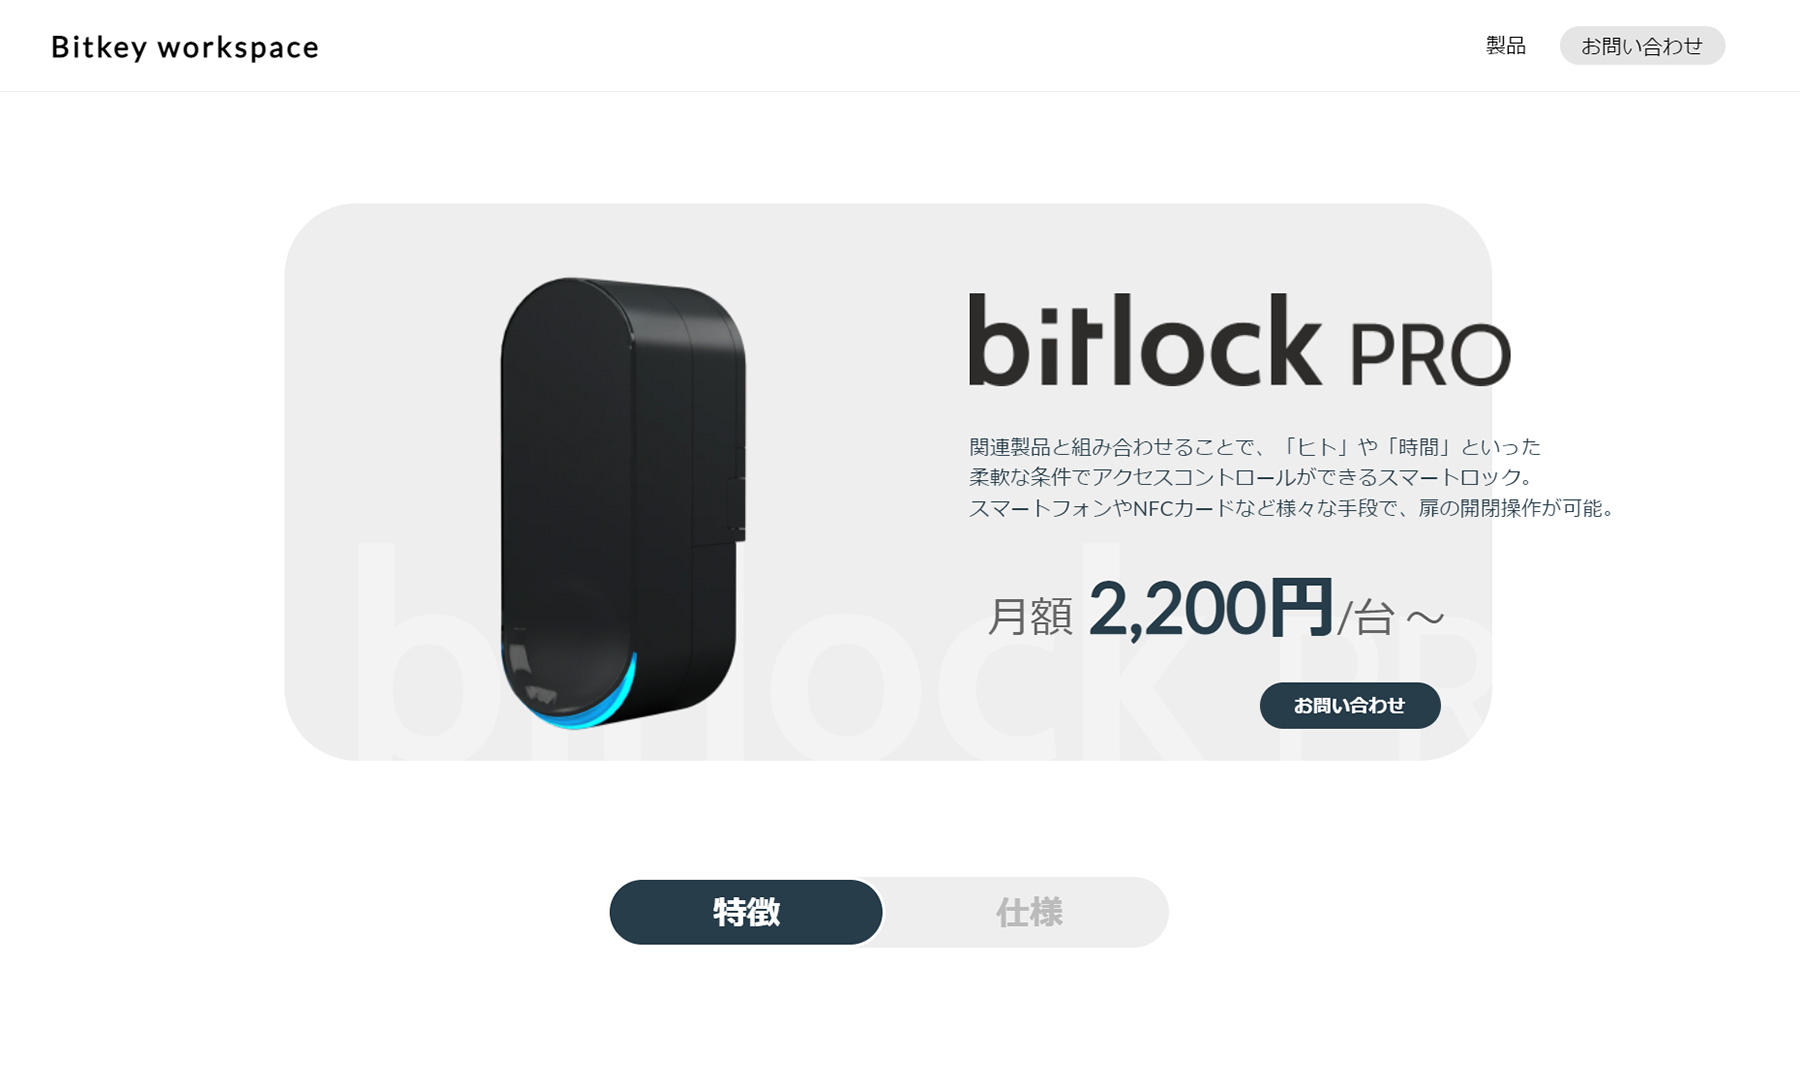 bitlock PRO公式WEBサイト